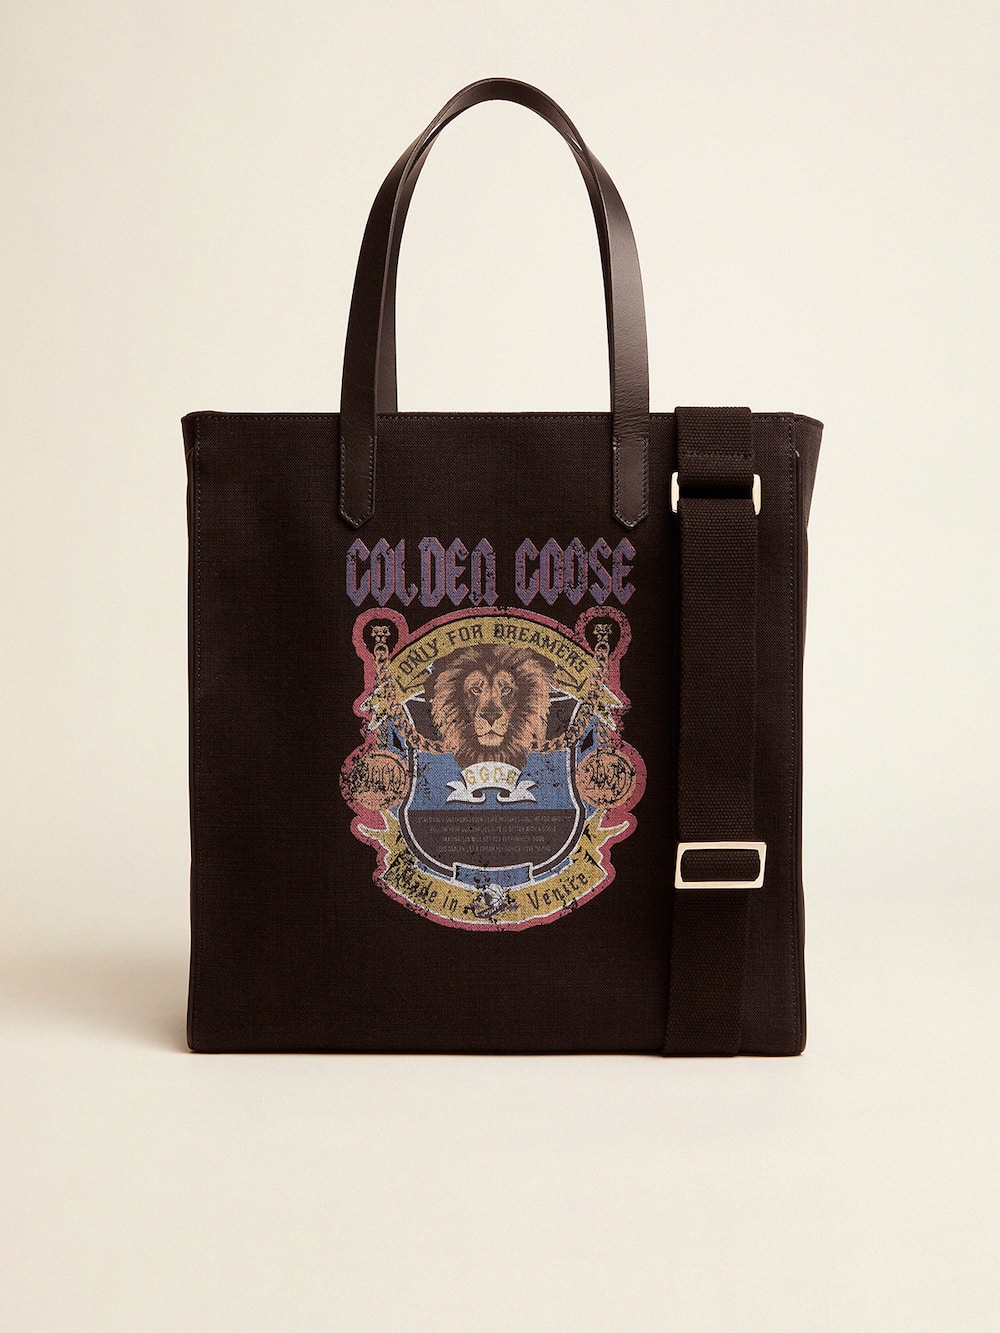 Golden Goose - Sac California North-South noir avec imprimé vintage in 